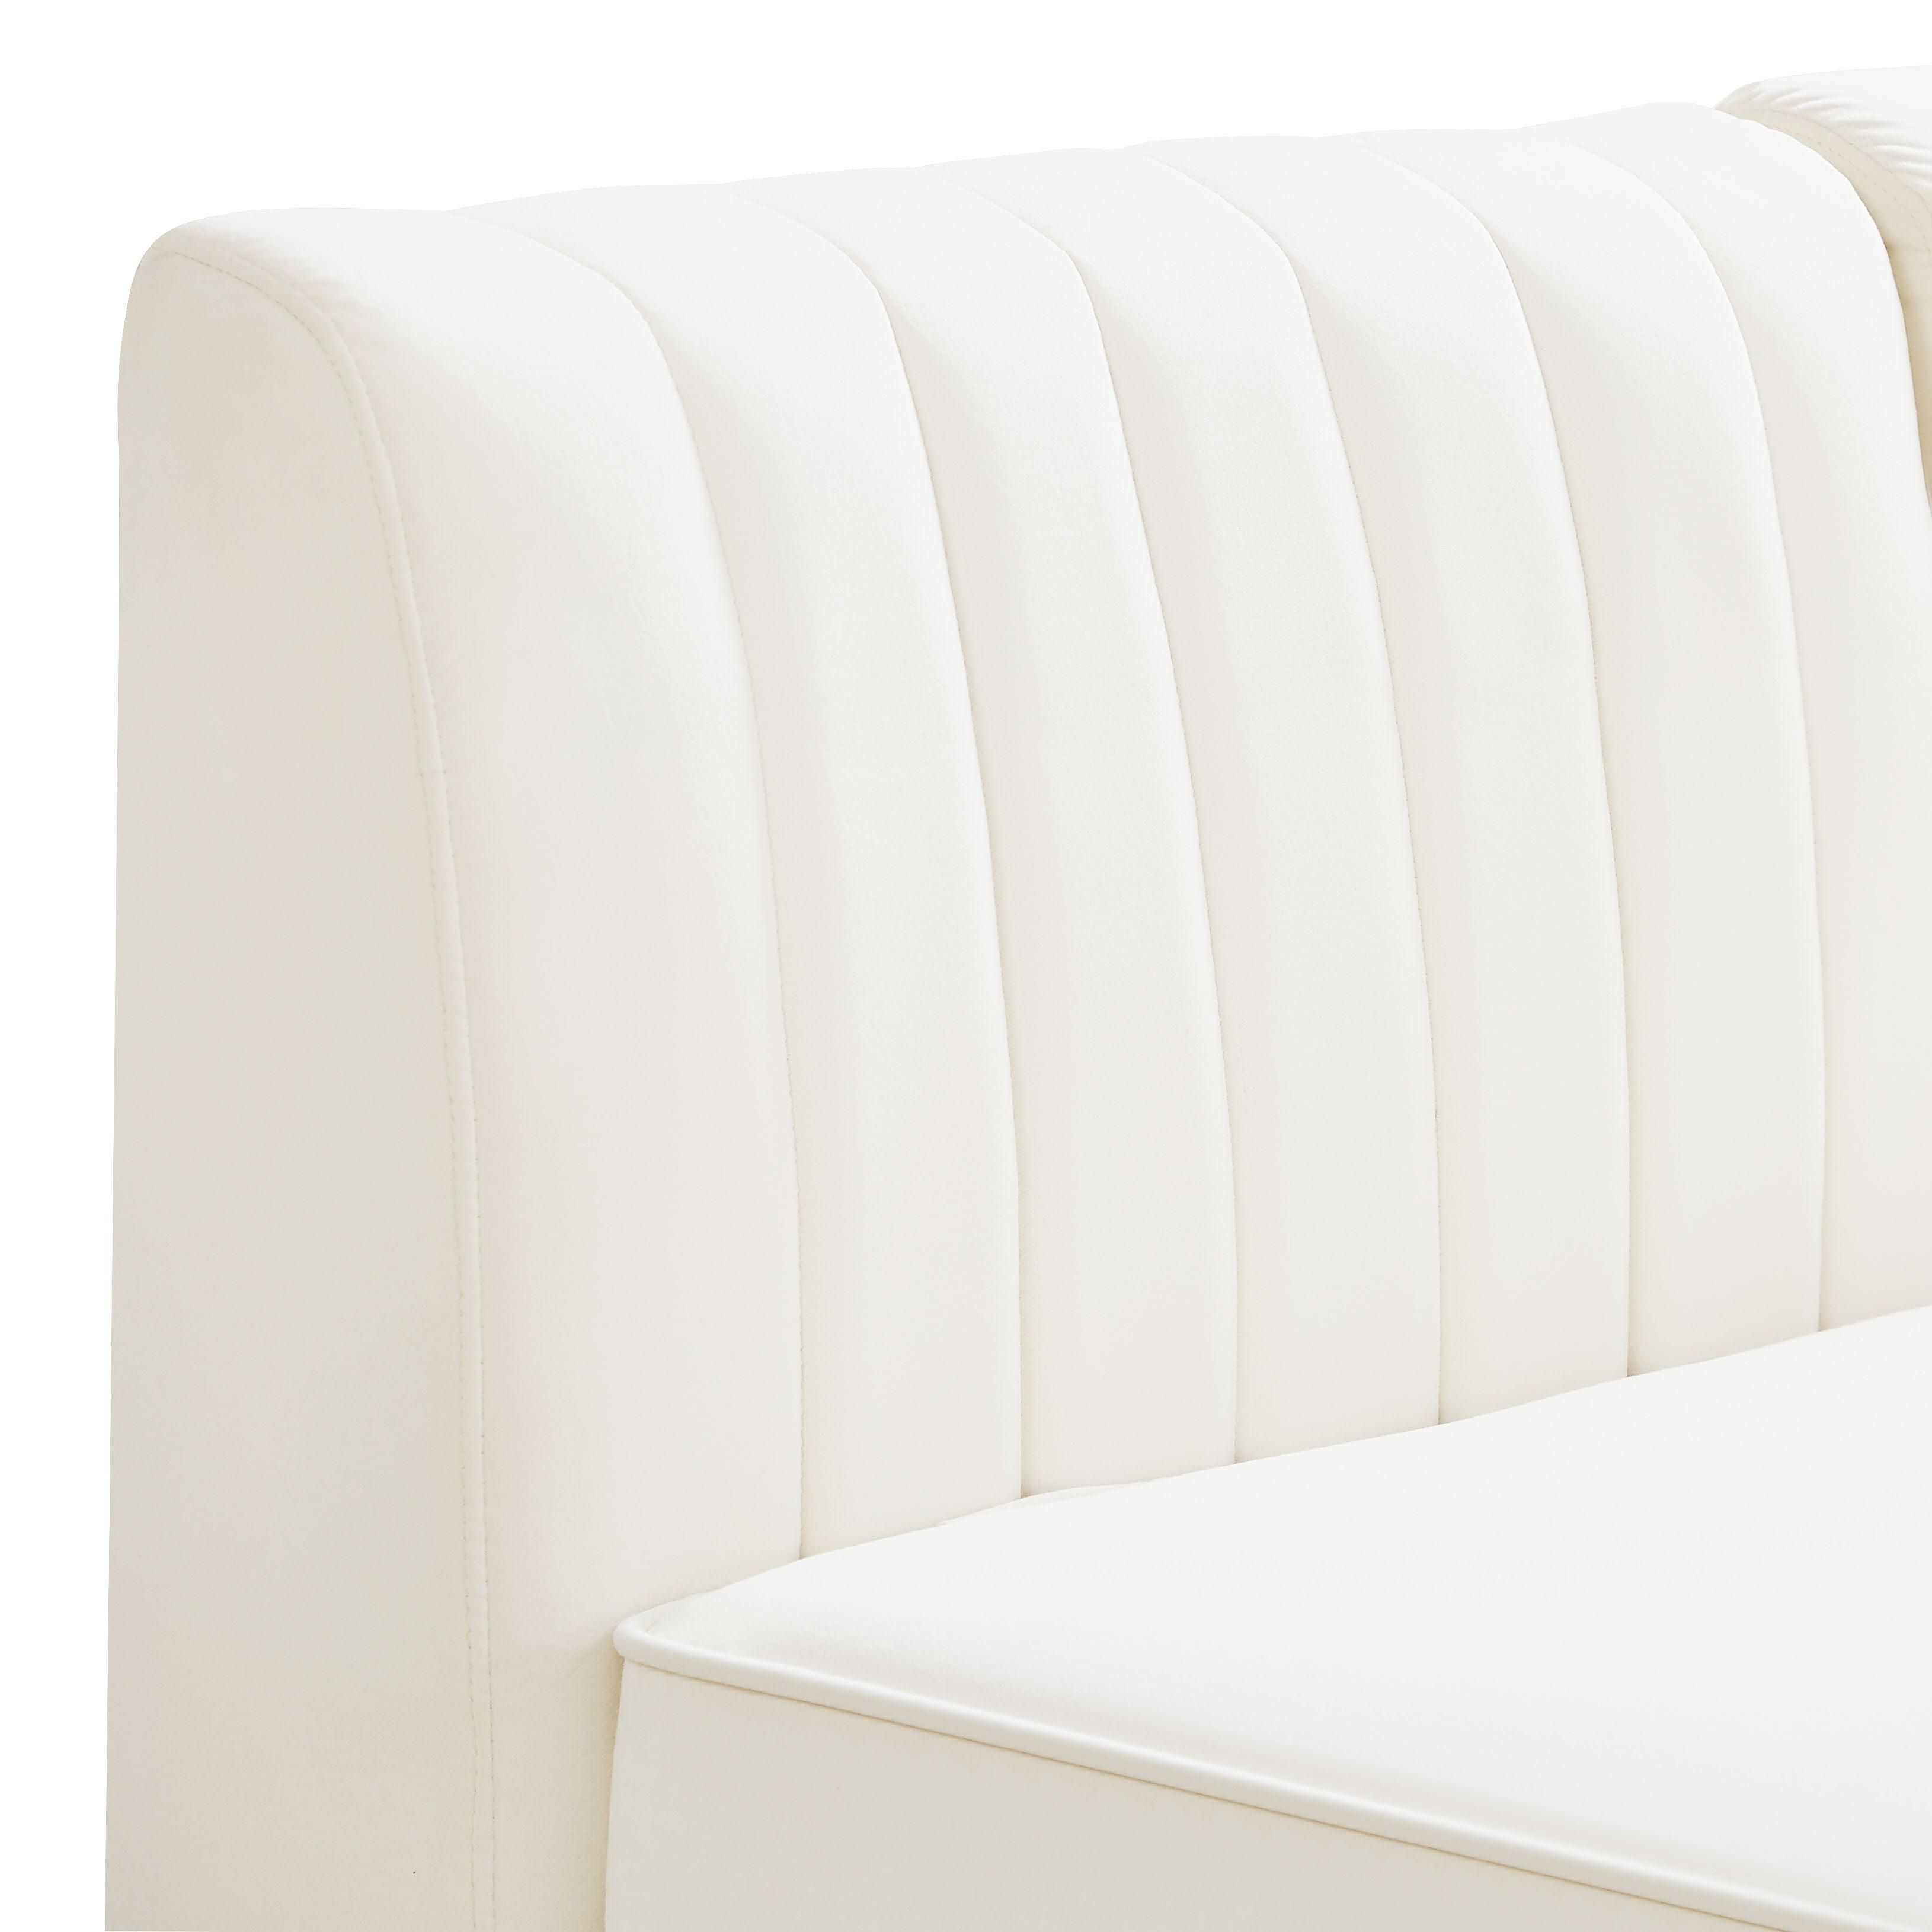 Meridian Furniture - Alina - Modular Sectional - 5th Avenue Furniture